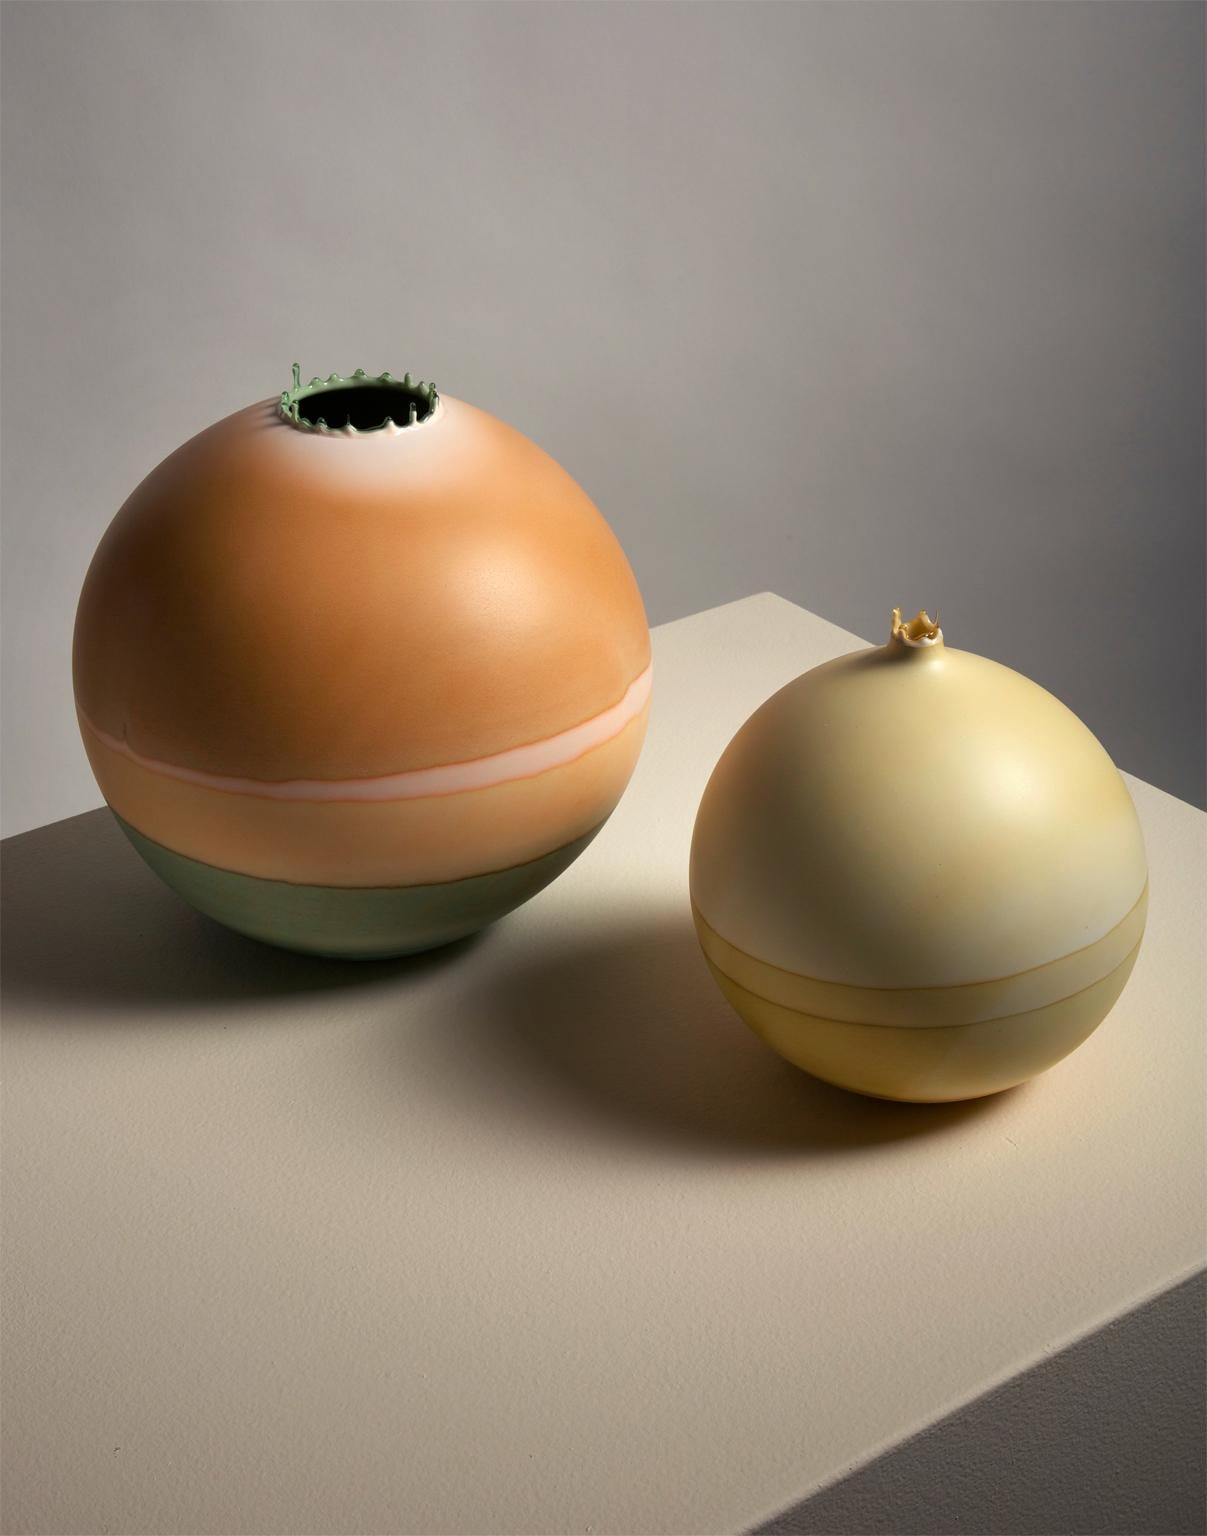 American Bone and Peach Saturn Vase by Elyse Graham